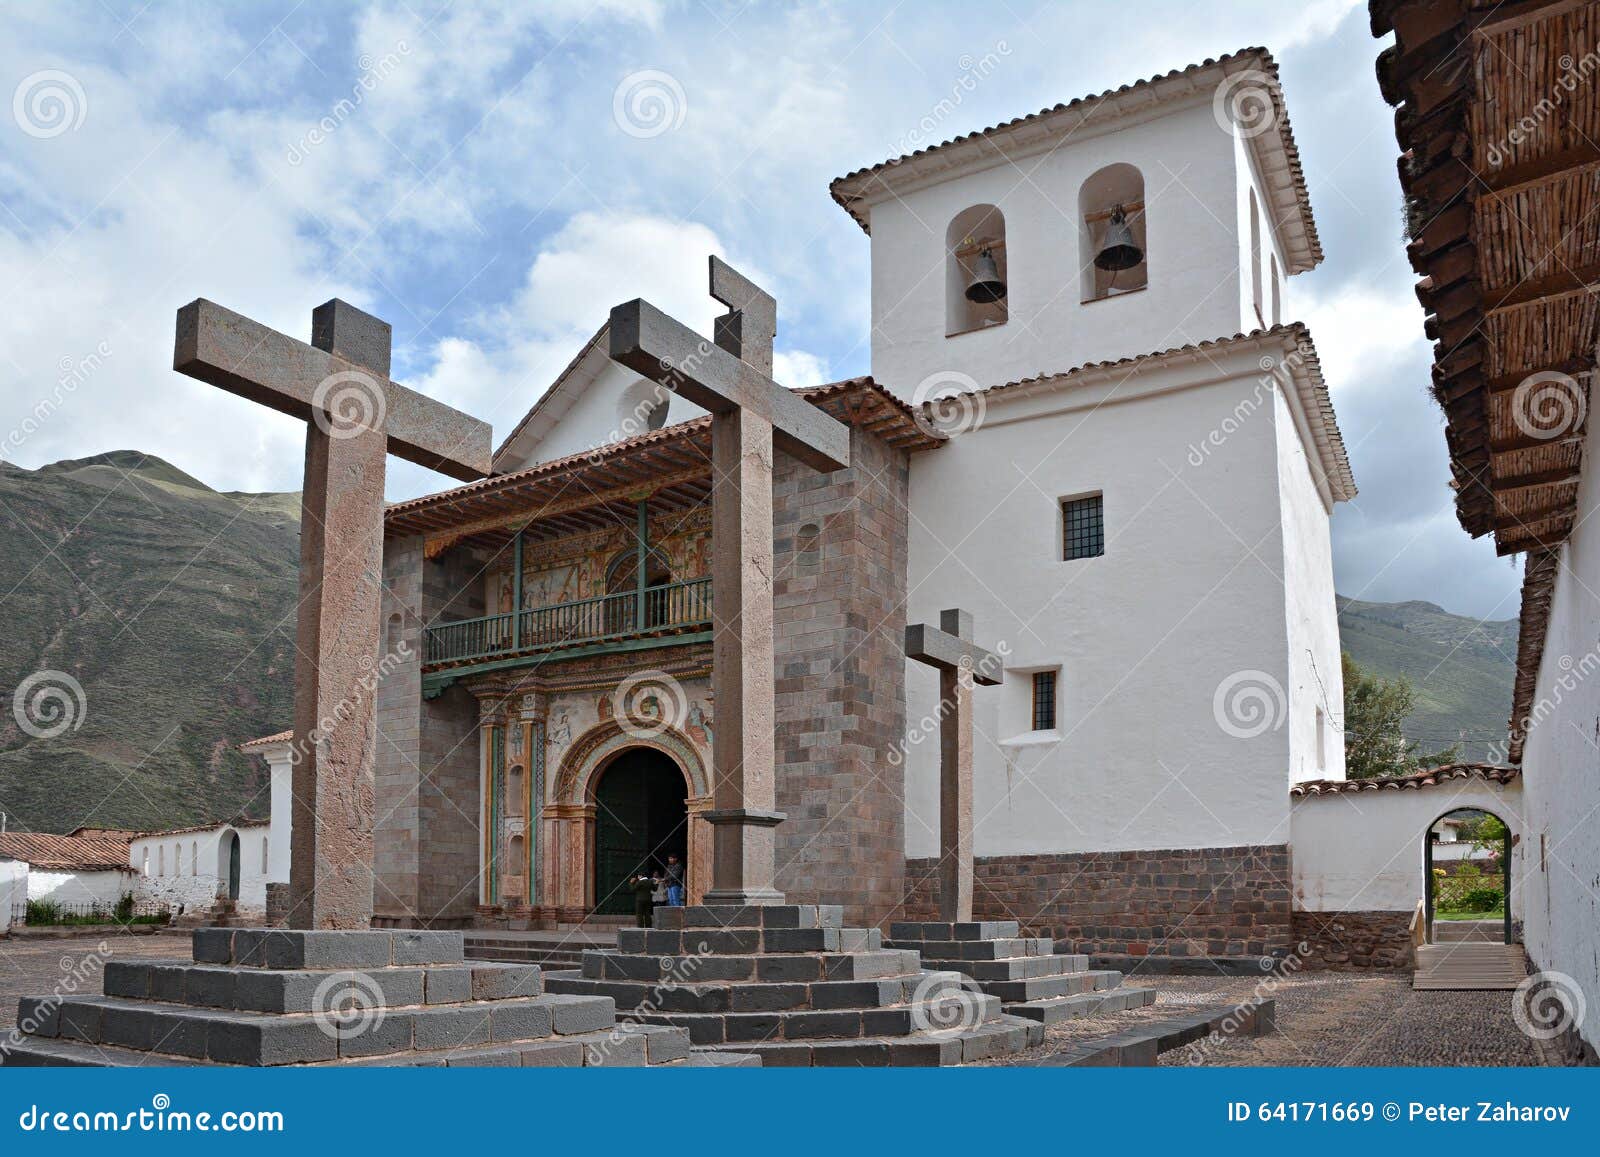 the church of saint peter-apostle of andahuaylillas.